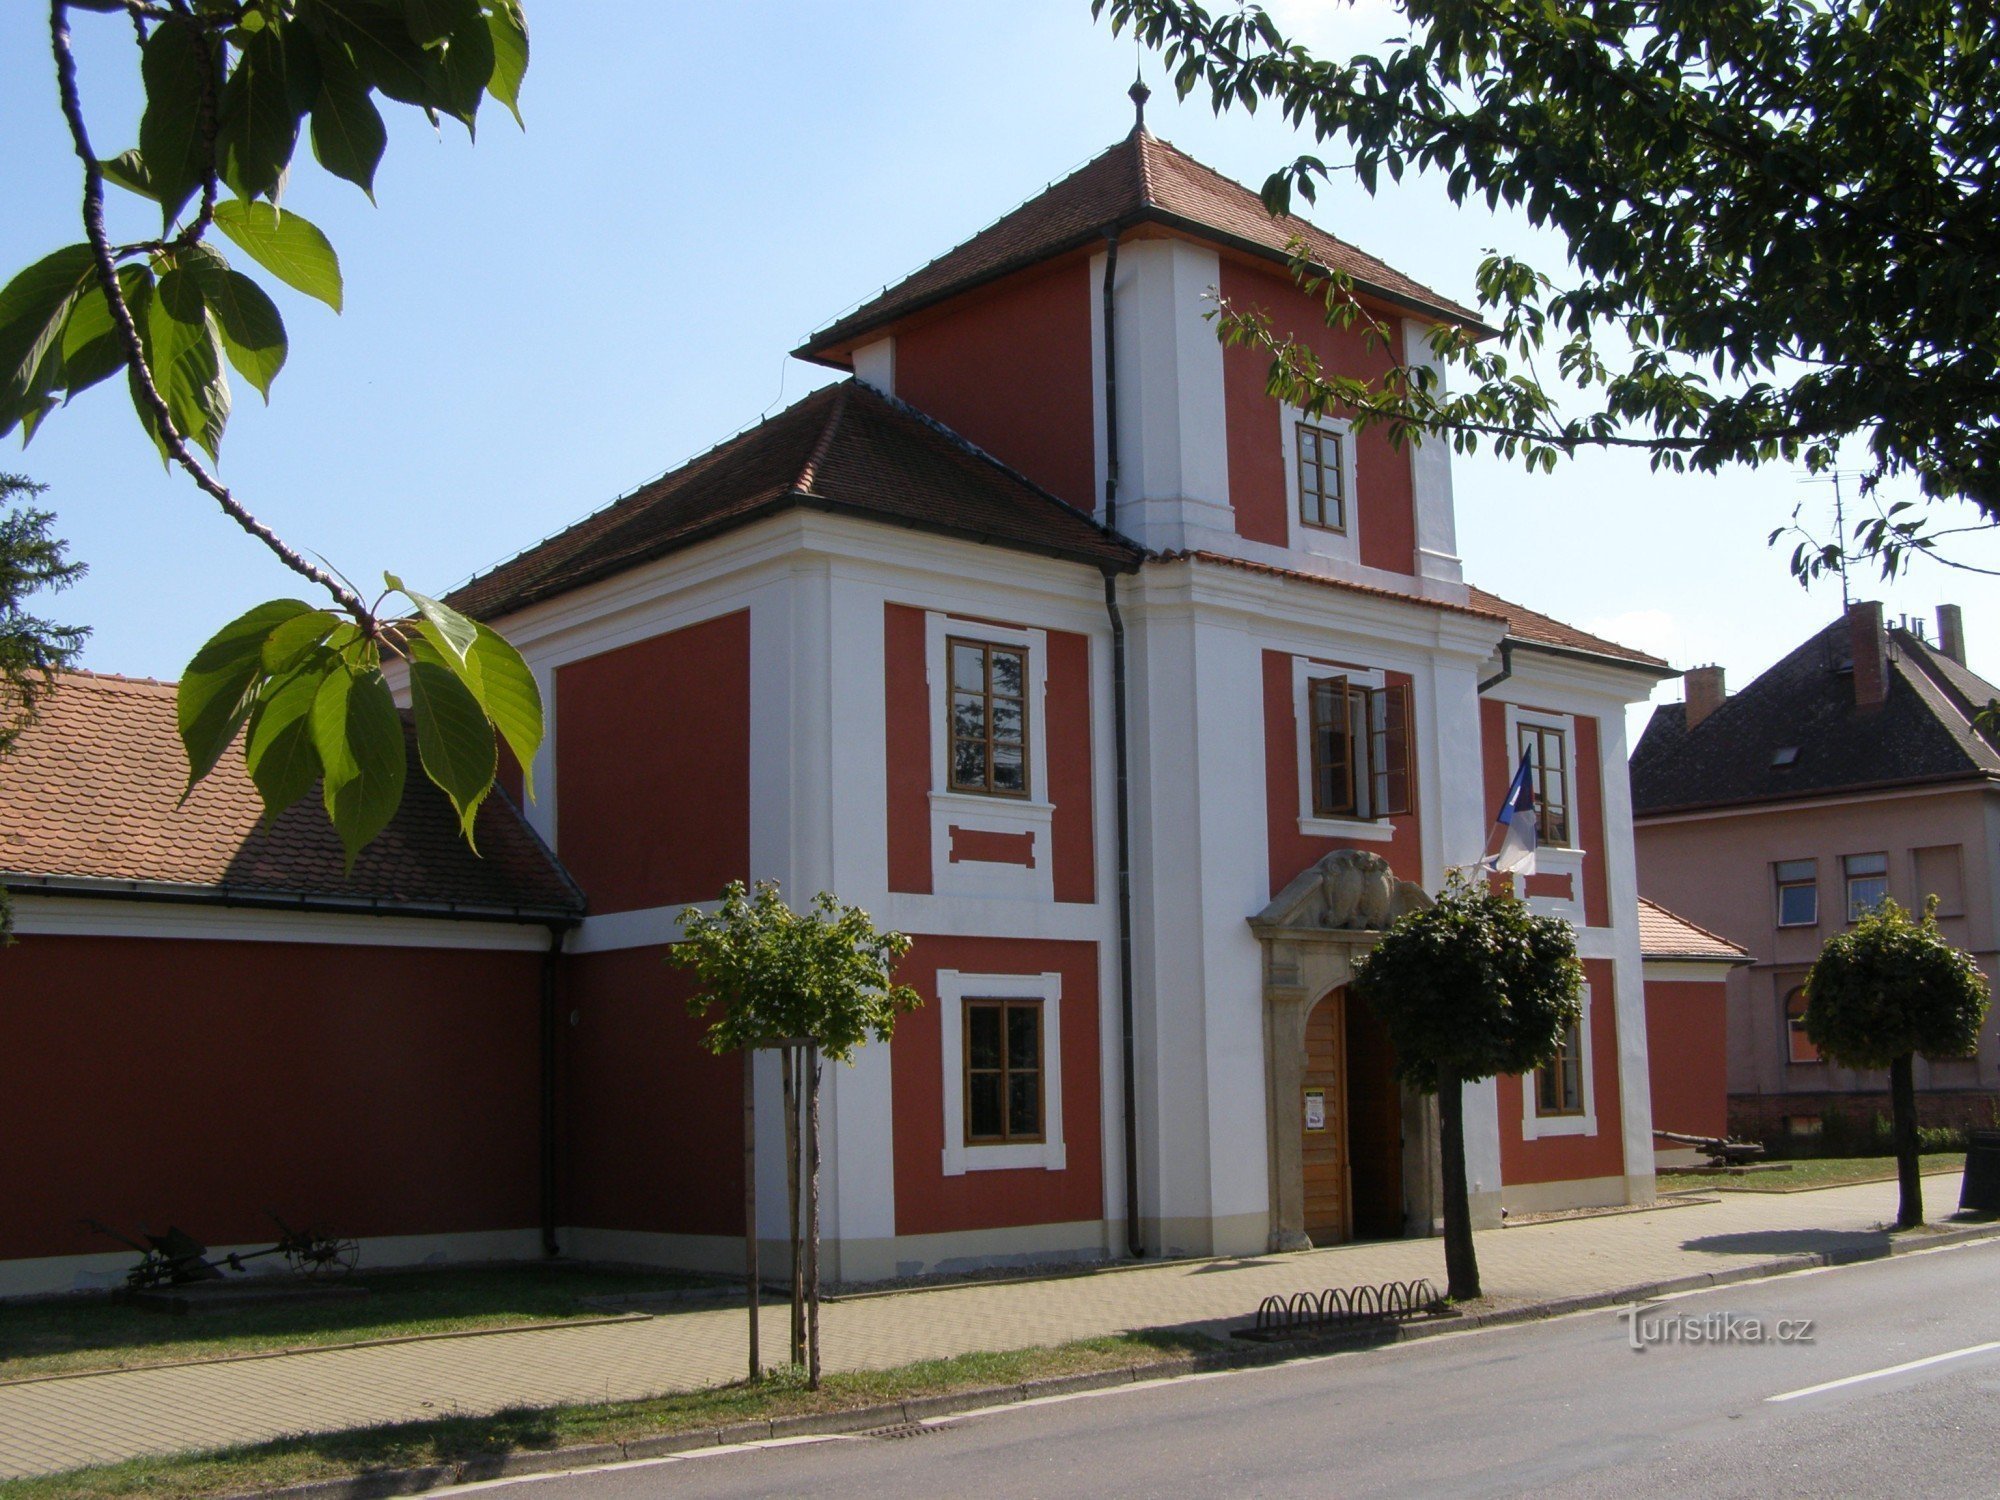 Chlumec nad Cidlinou - Loreta, musée de la ville